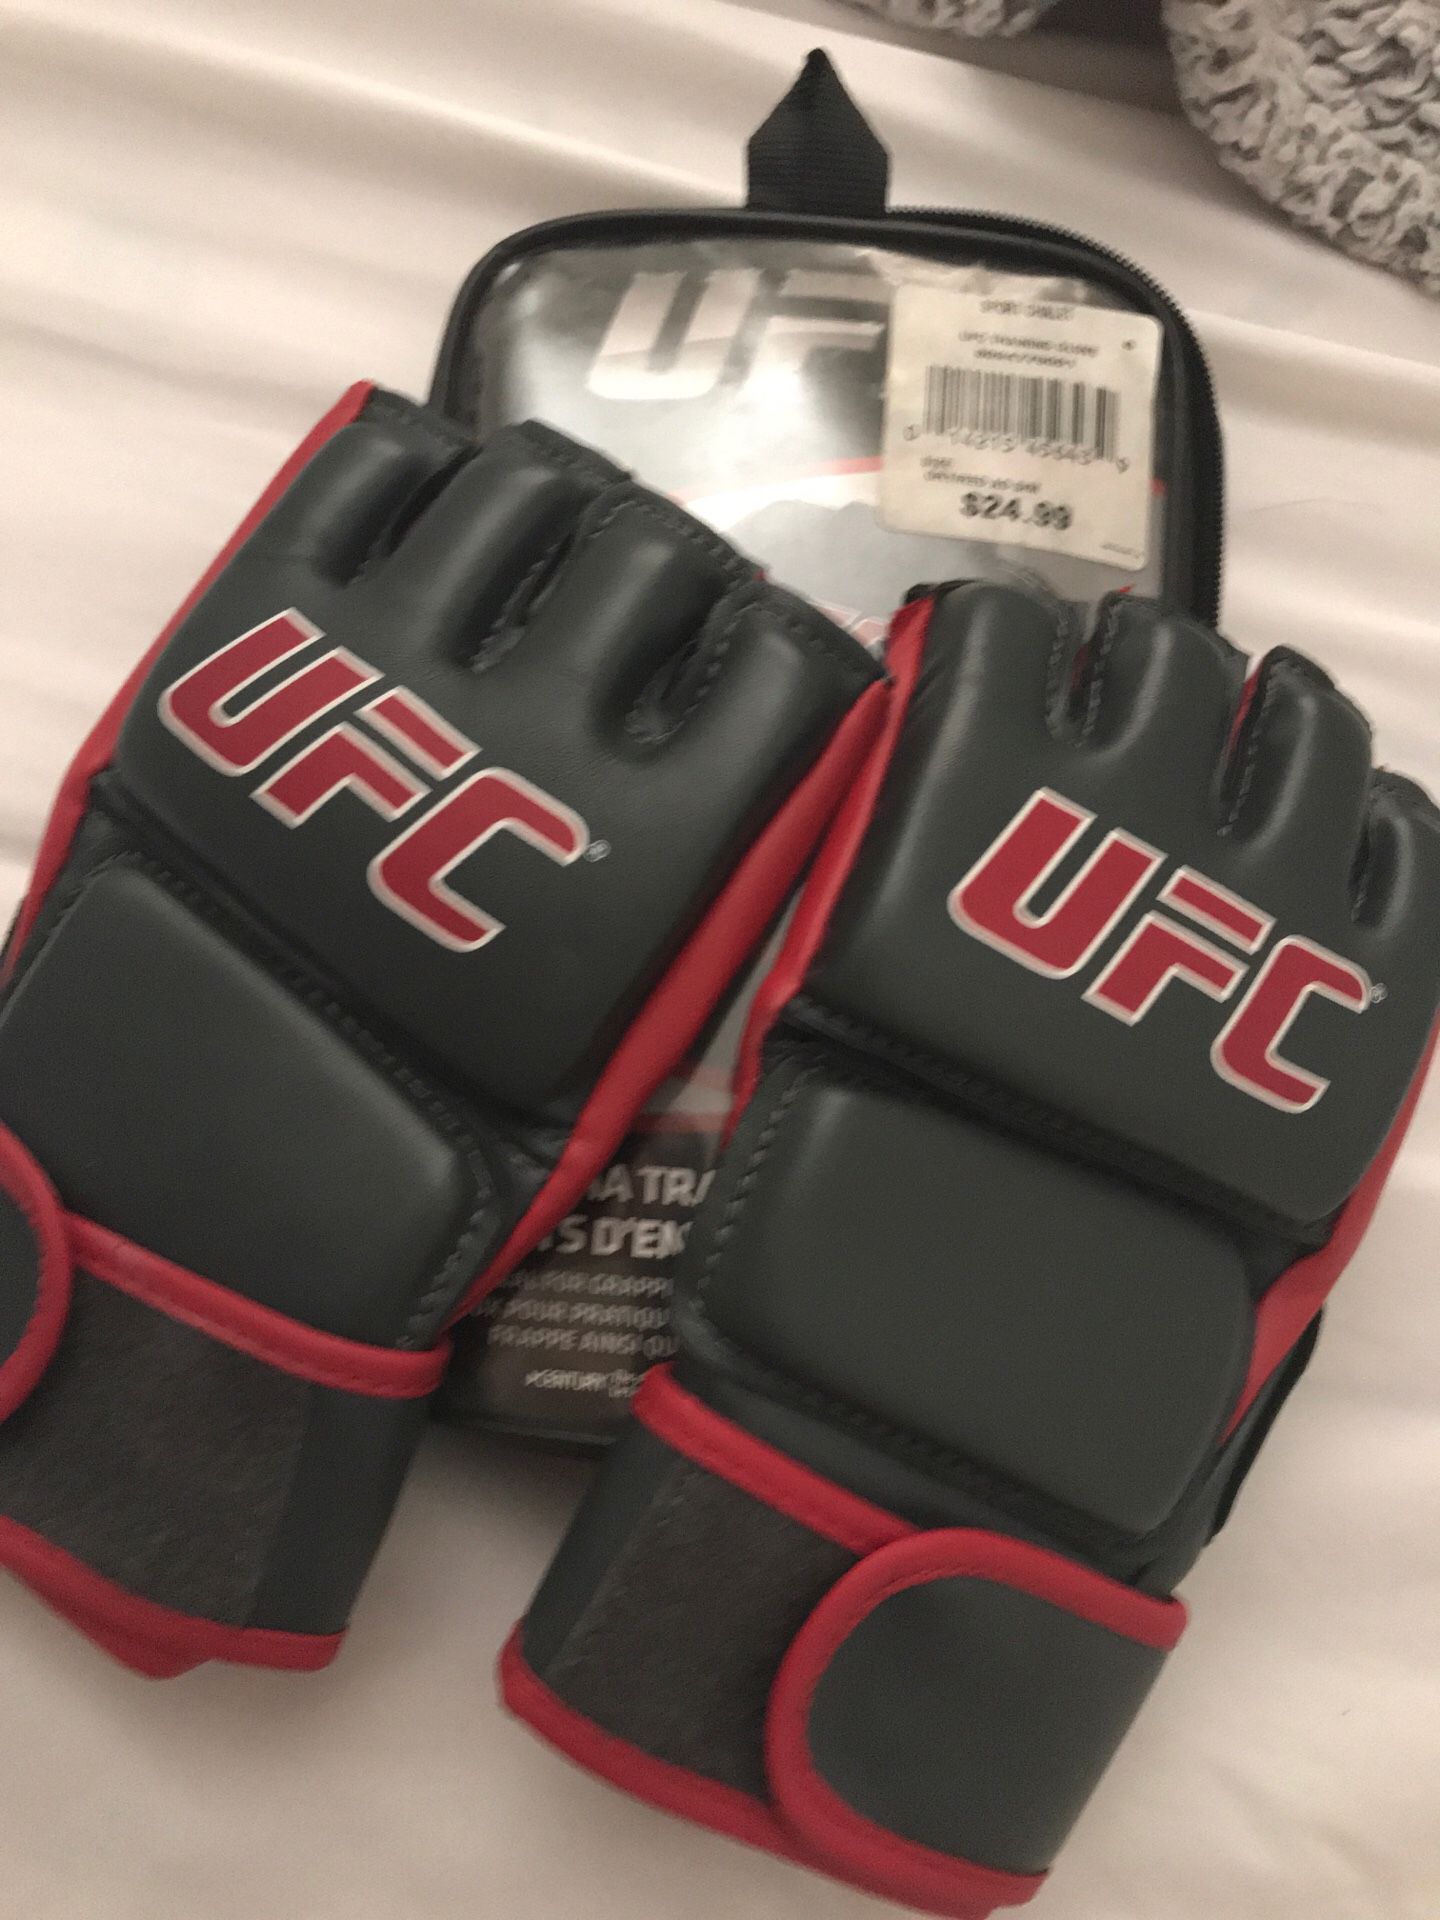 UFC training gloves brand new